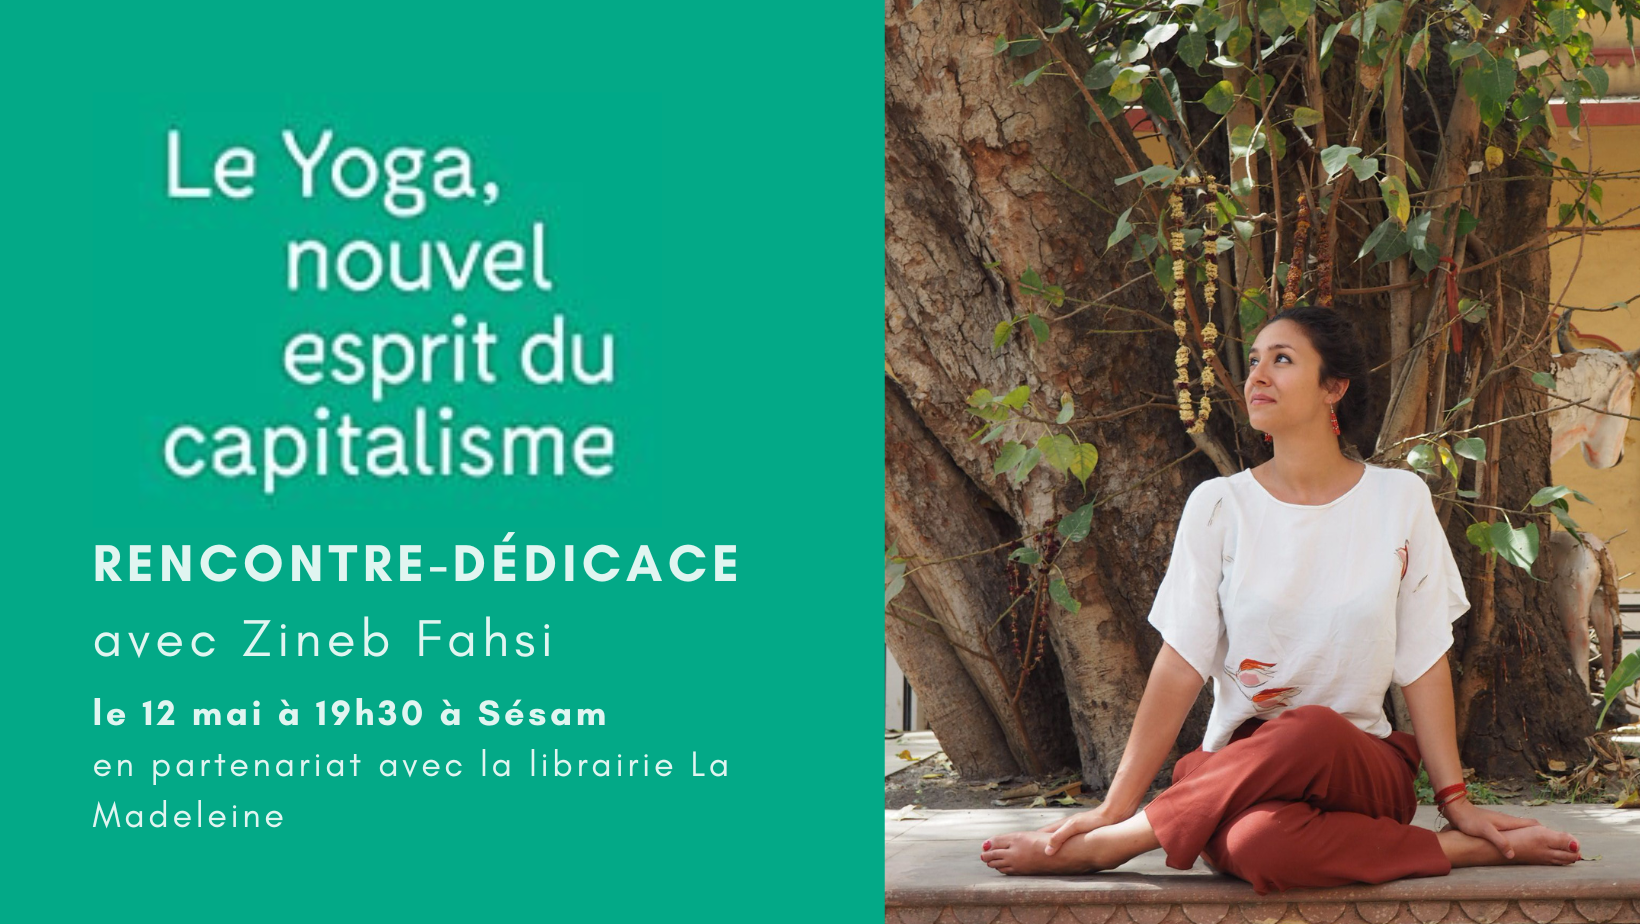 Rencontre dédicace Zineb Fahsi Lyon yoga capitalisme